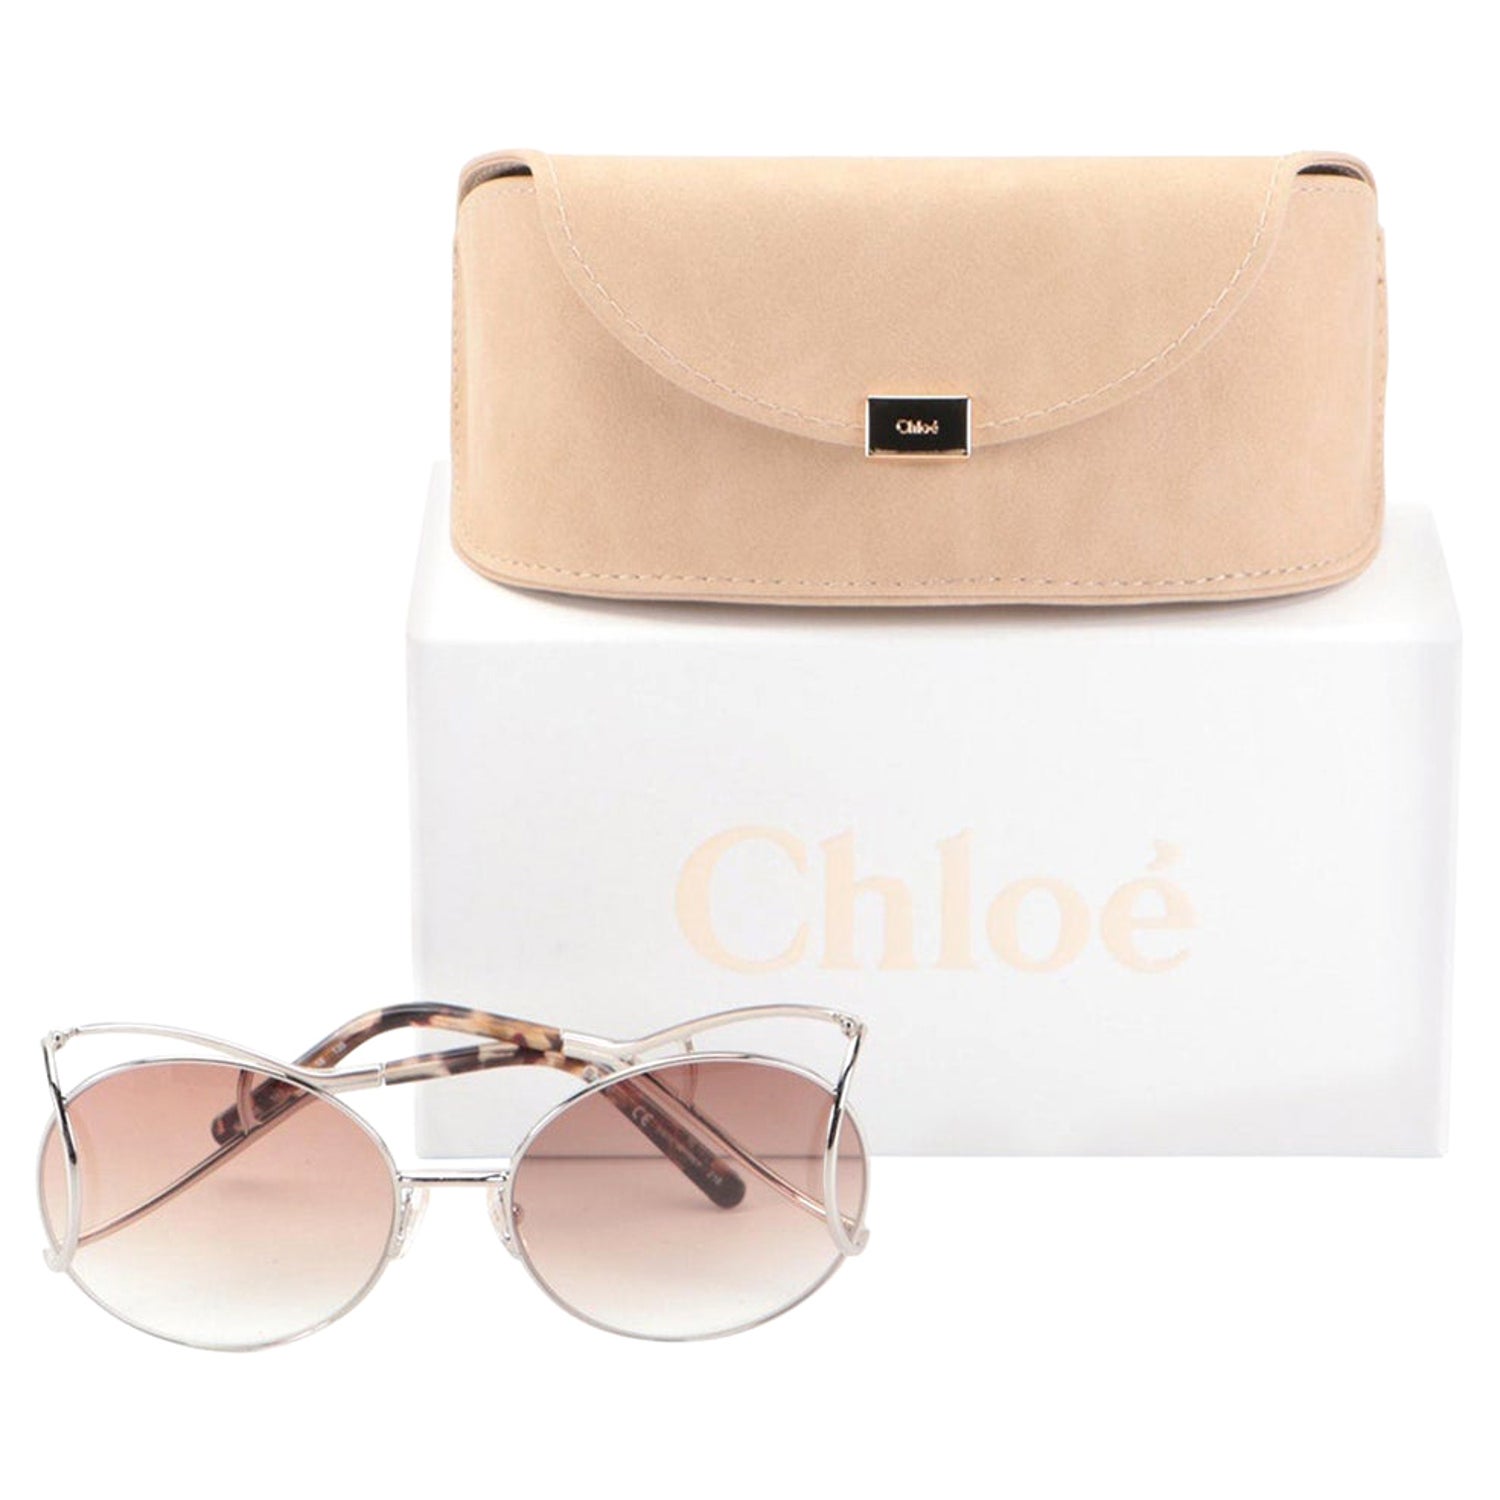 Chloe Sunglasses - 11 For Sale on 1stDibs